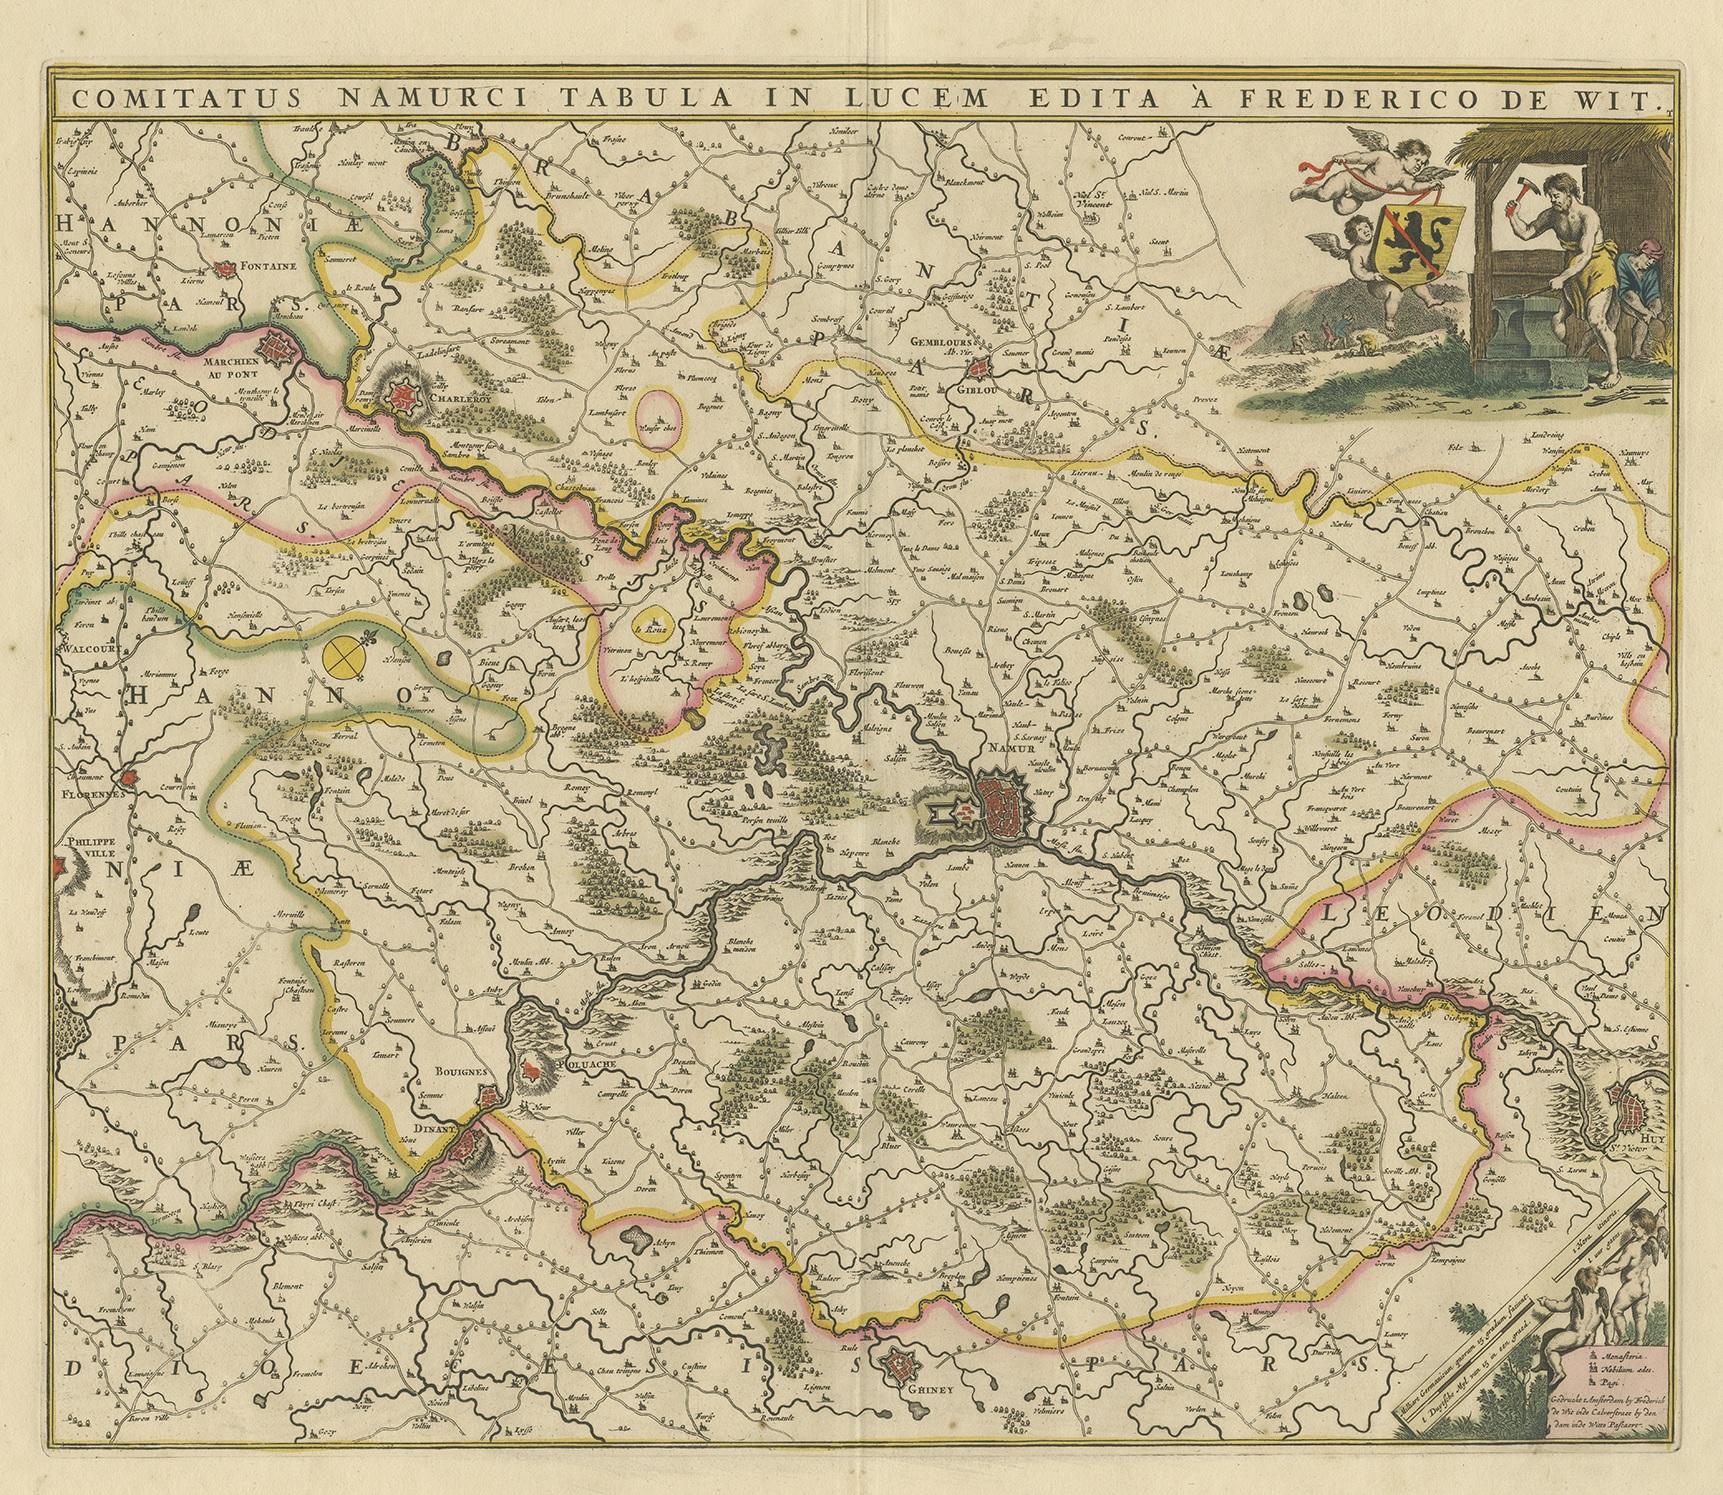 Antique map titled 'Comitatus Namurci Tabula in Lucem Edita'. Large map of the Namur region, France. Published by F. de Wit, circa 1680.